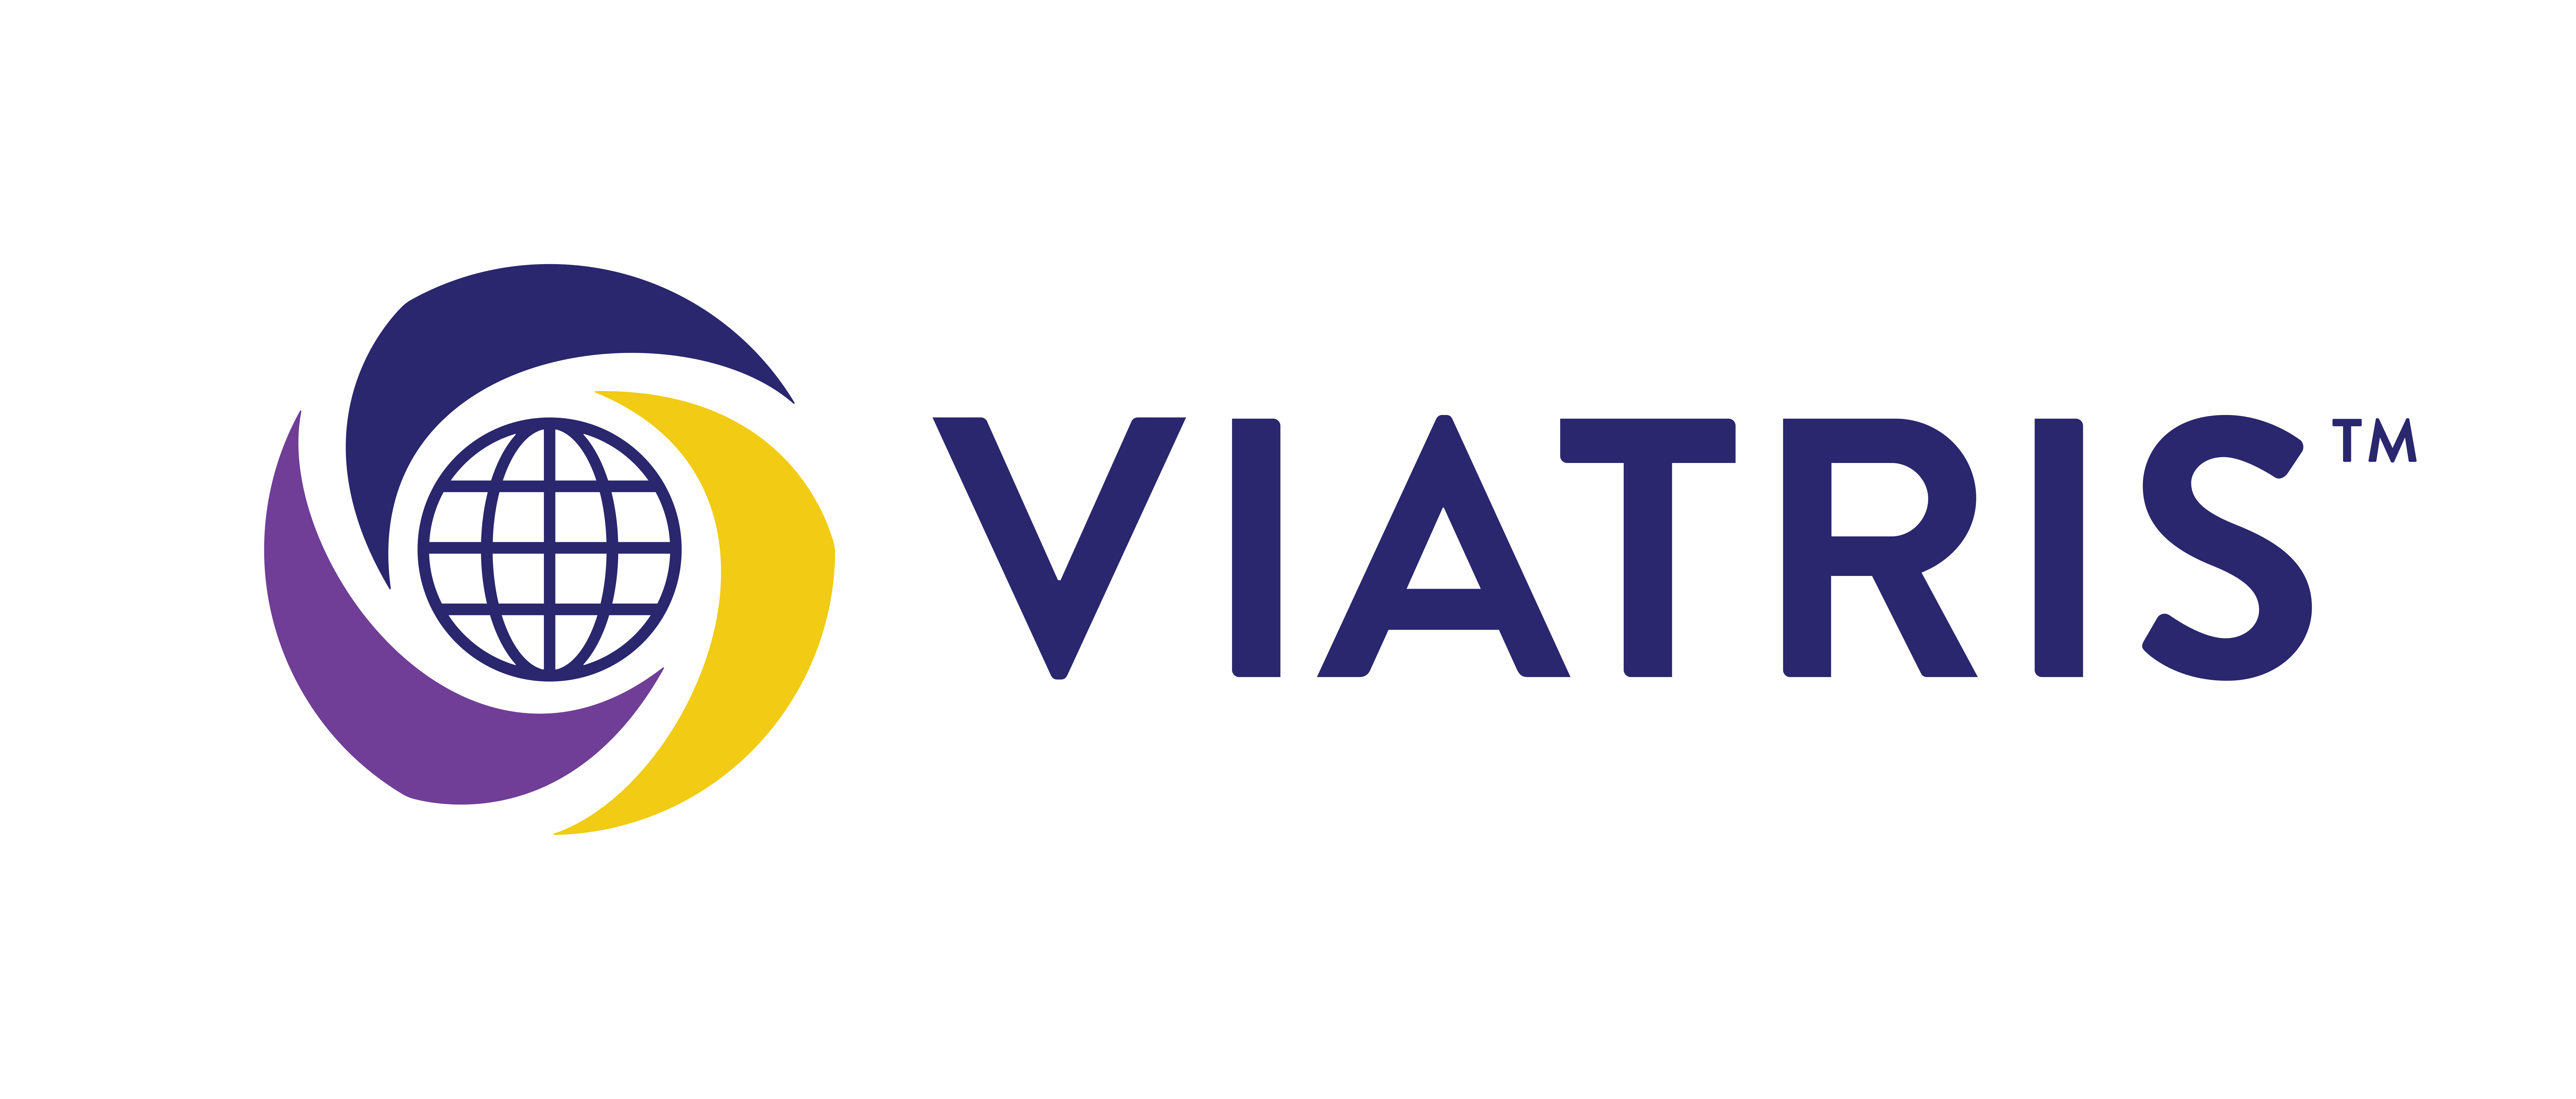 Purple and yellow Viatris logo.